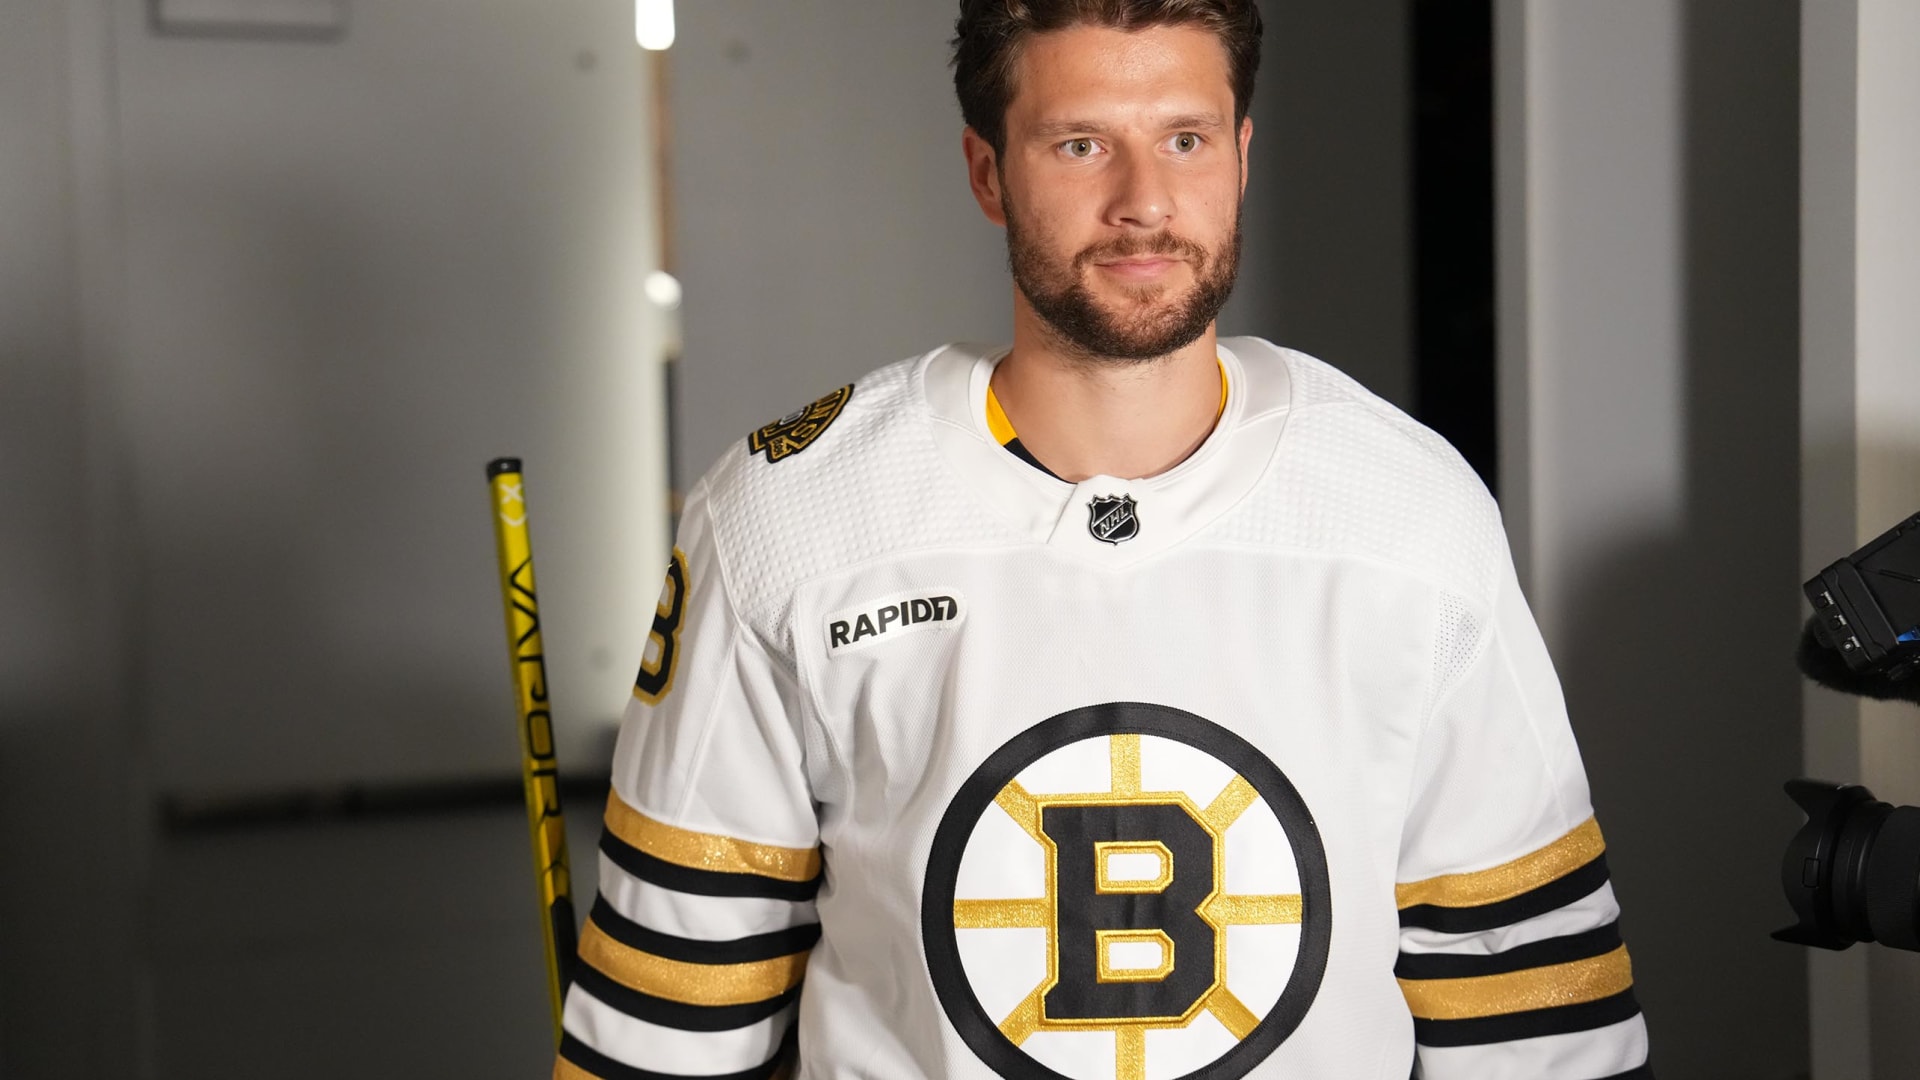 Boston Bruins Wearing Rapid7 Advertisement on Jerseys Starting in